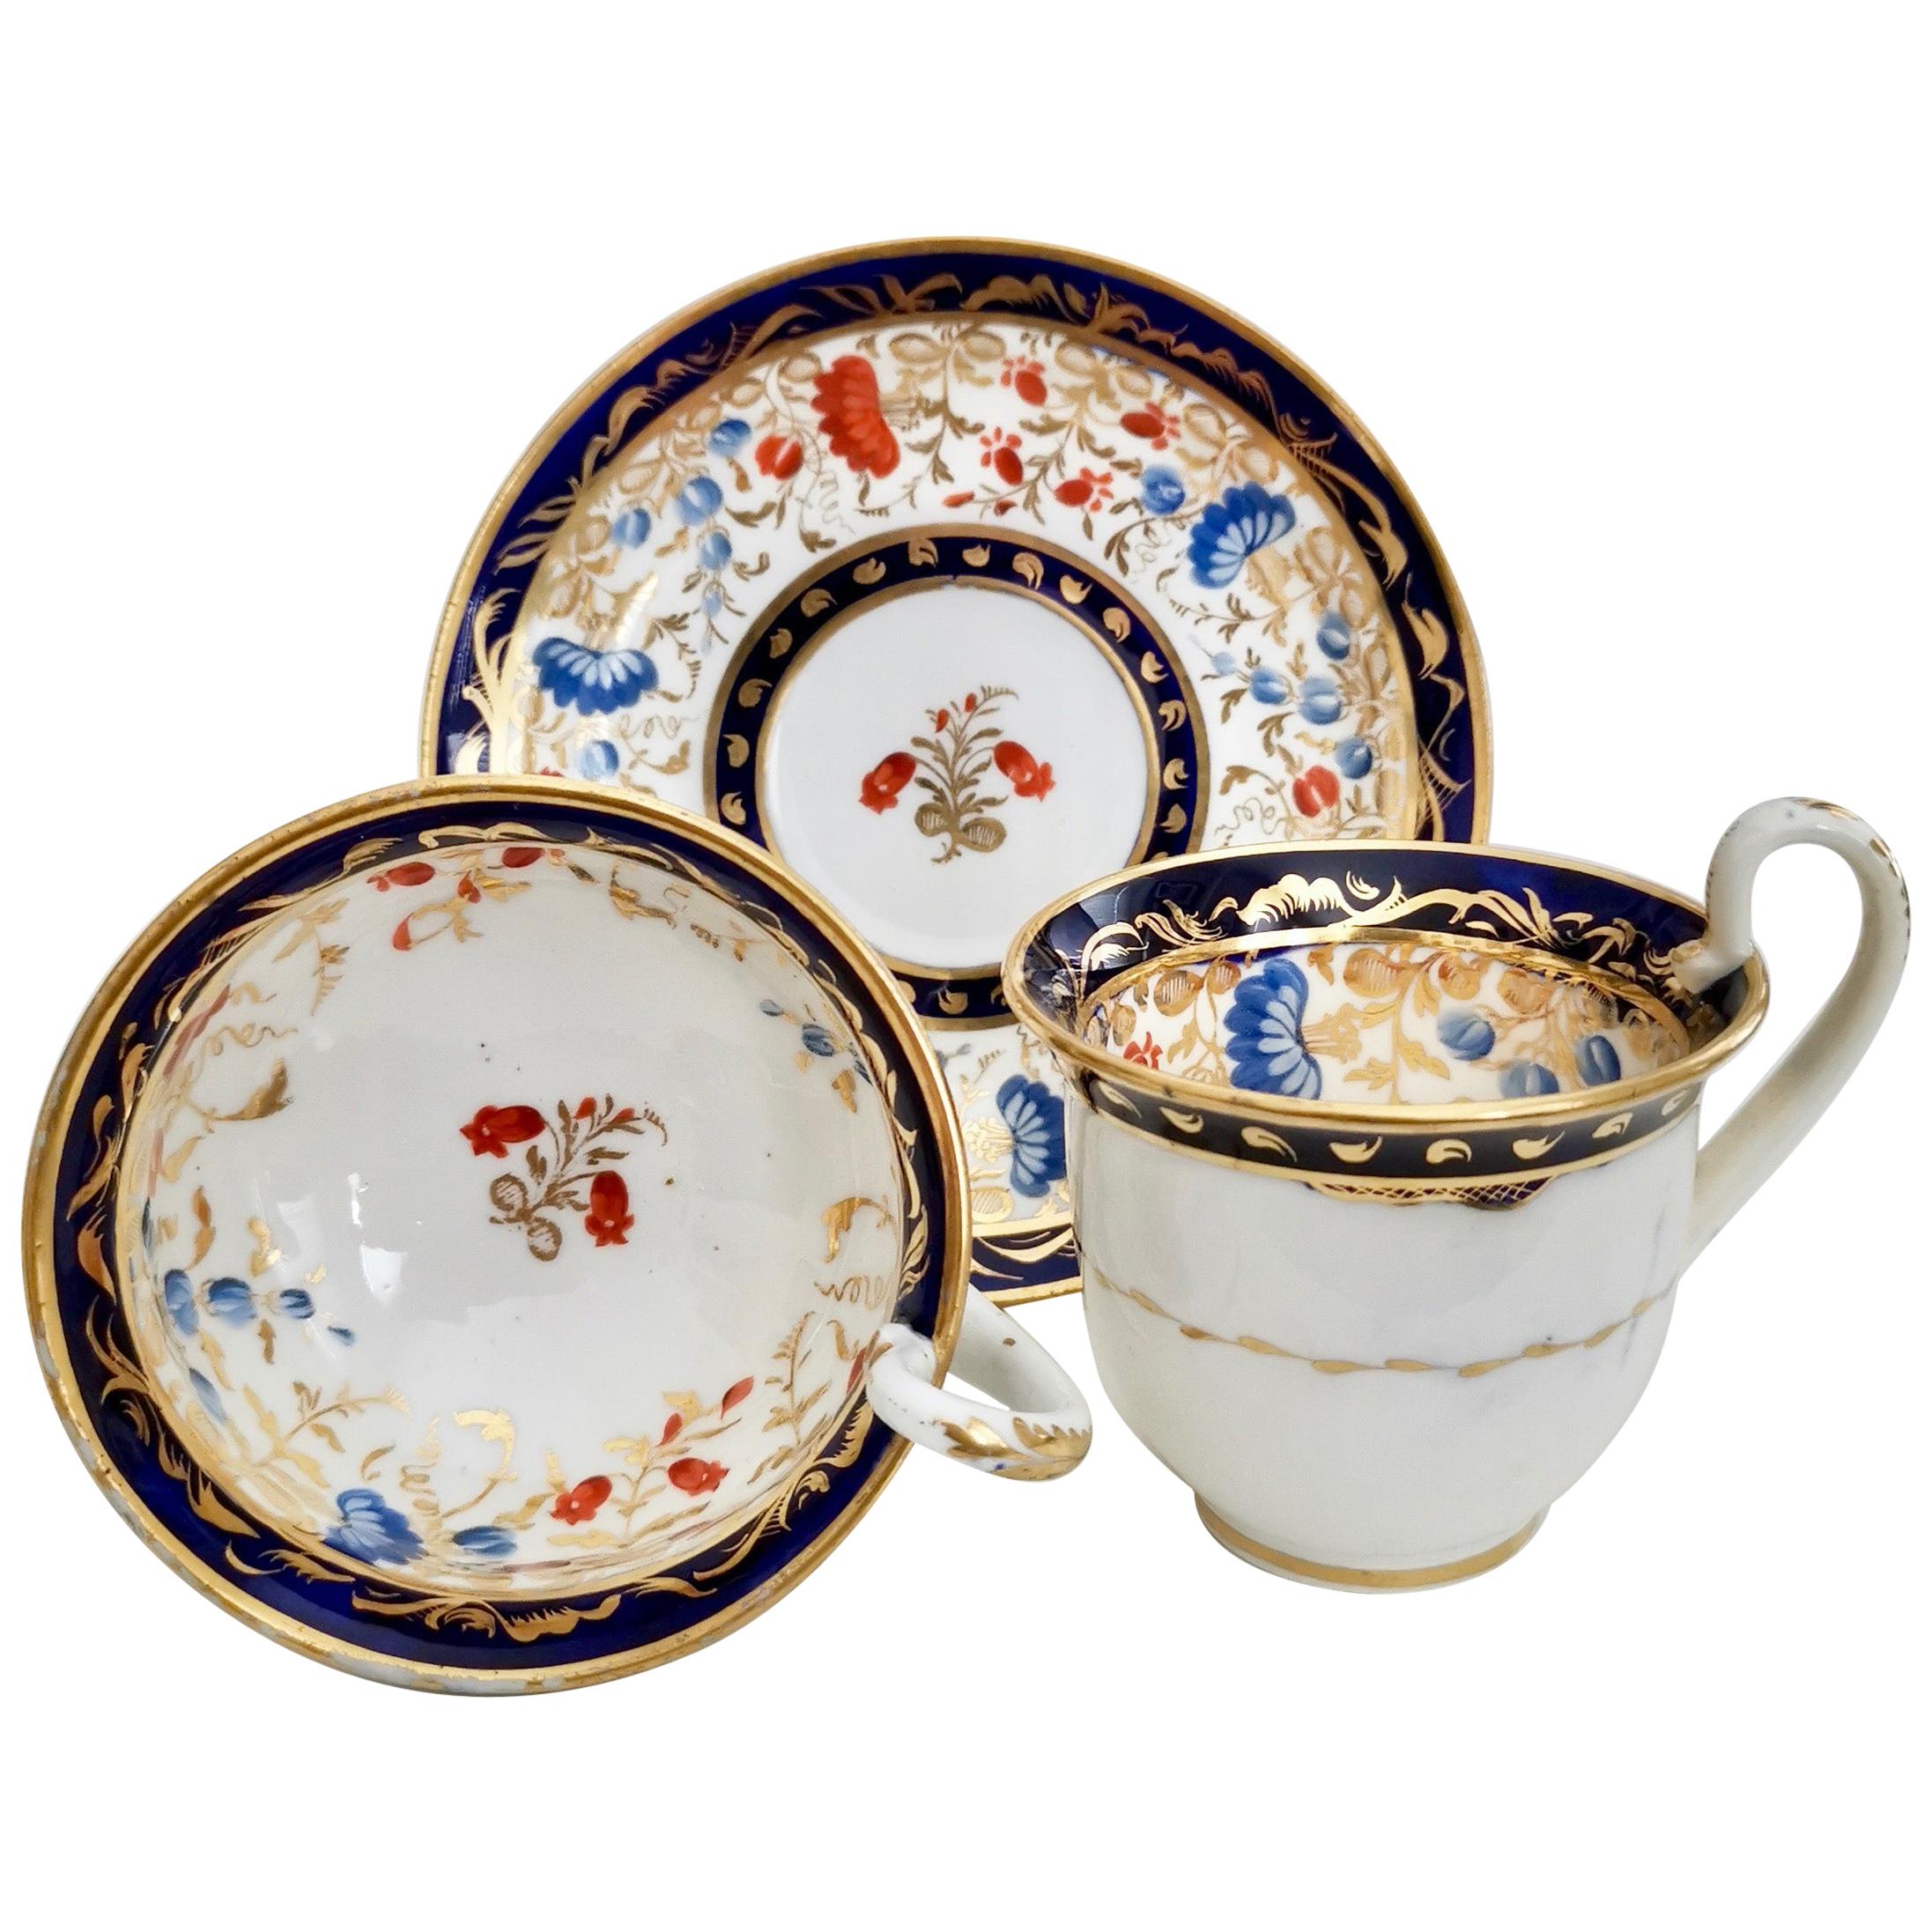 Coalport Porcelain Teacup Trio, White and Floral, Empire Shape, Regency ca 1815